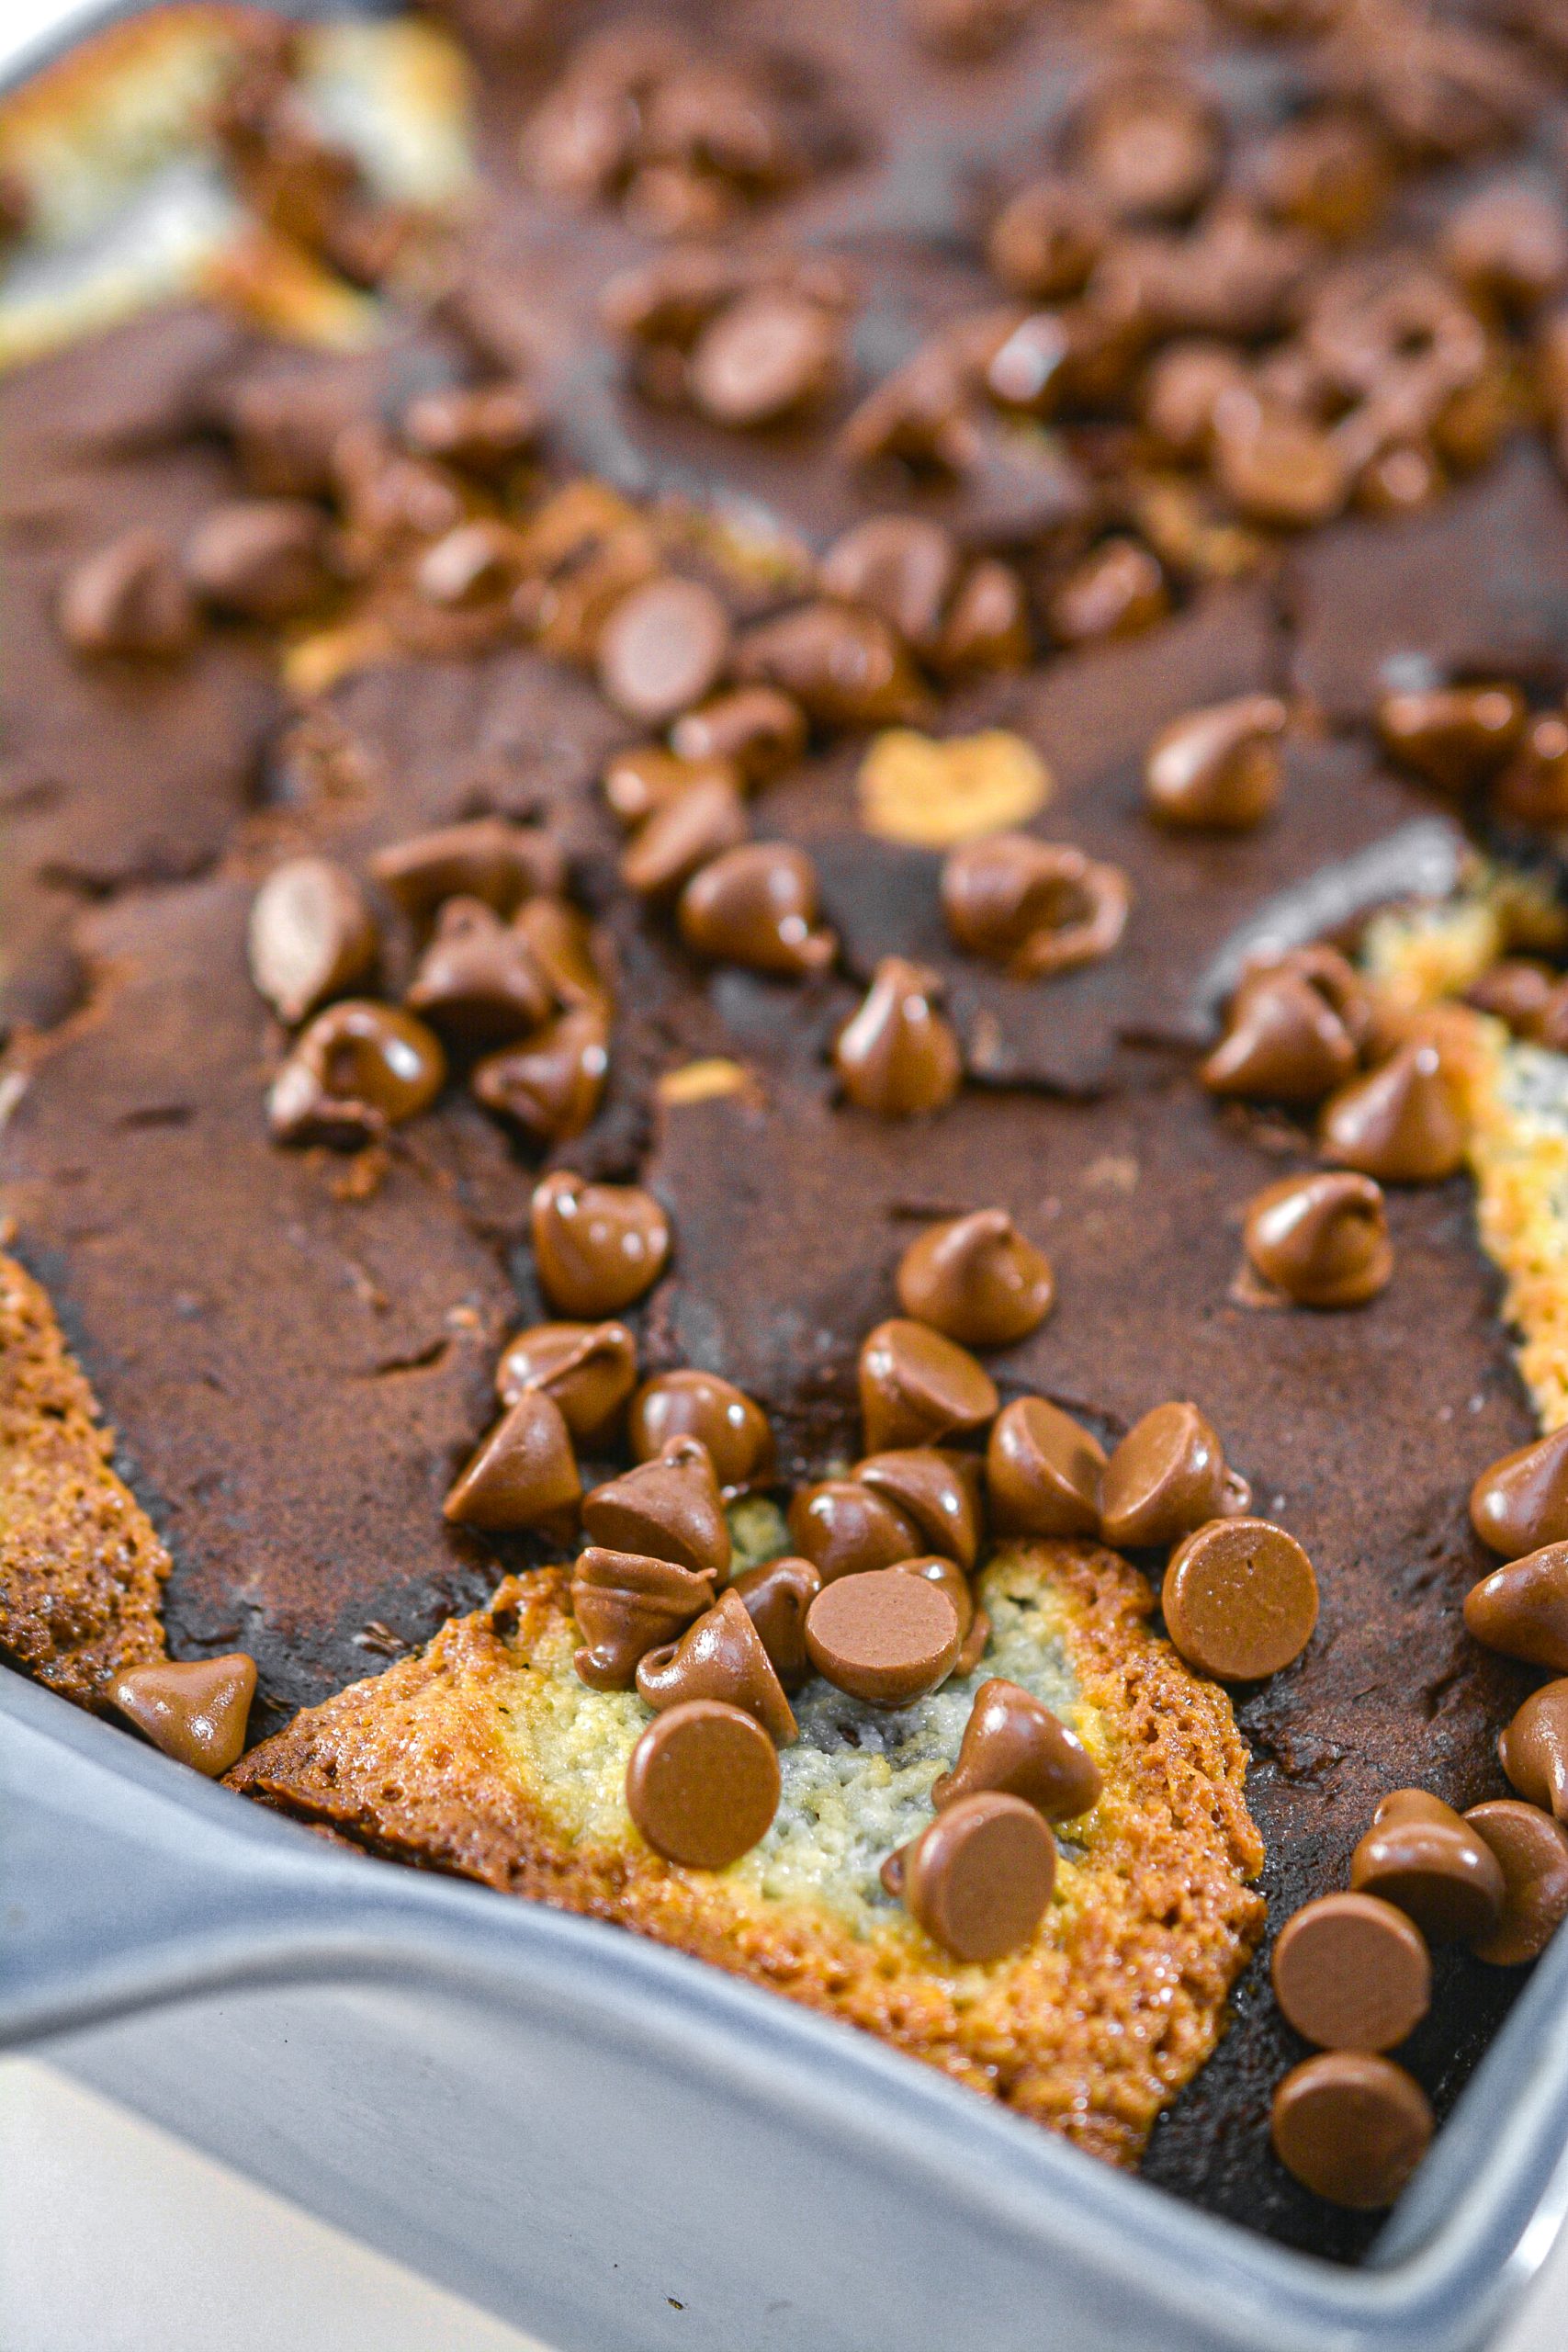 Chocolate Earthquake Cake Recipe